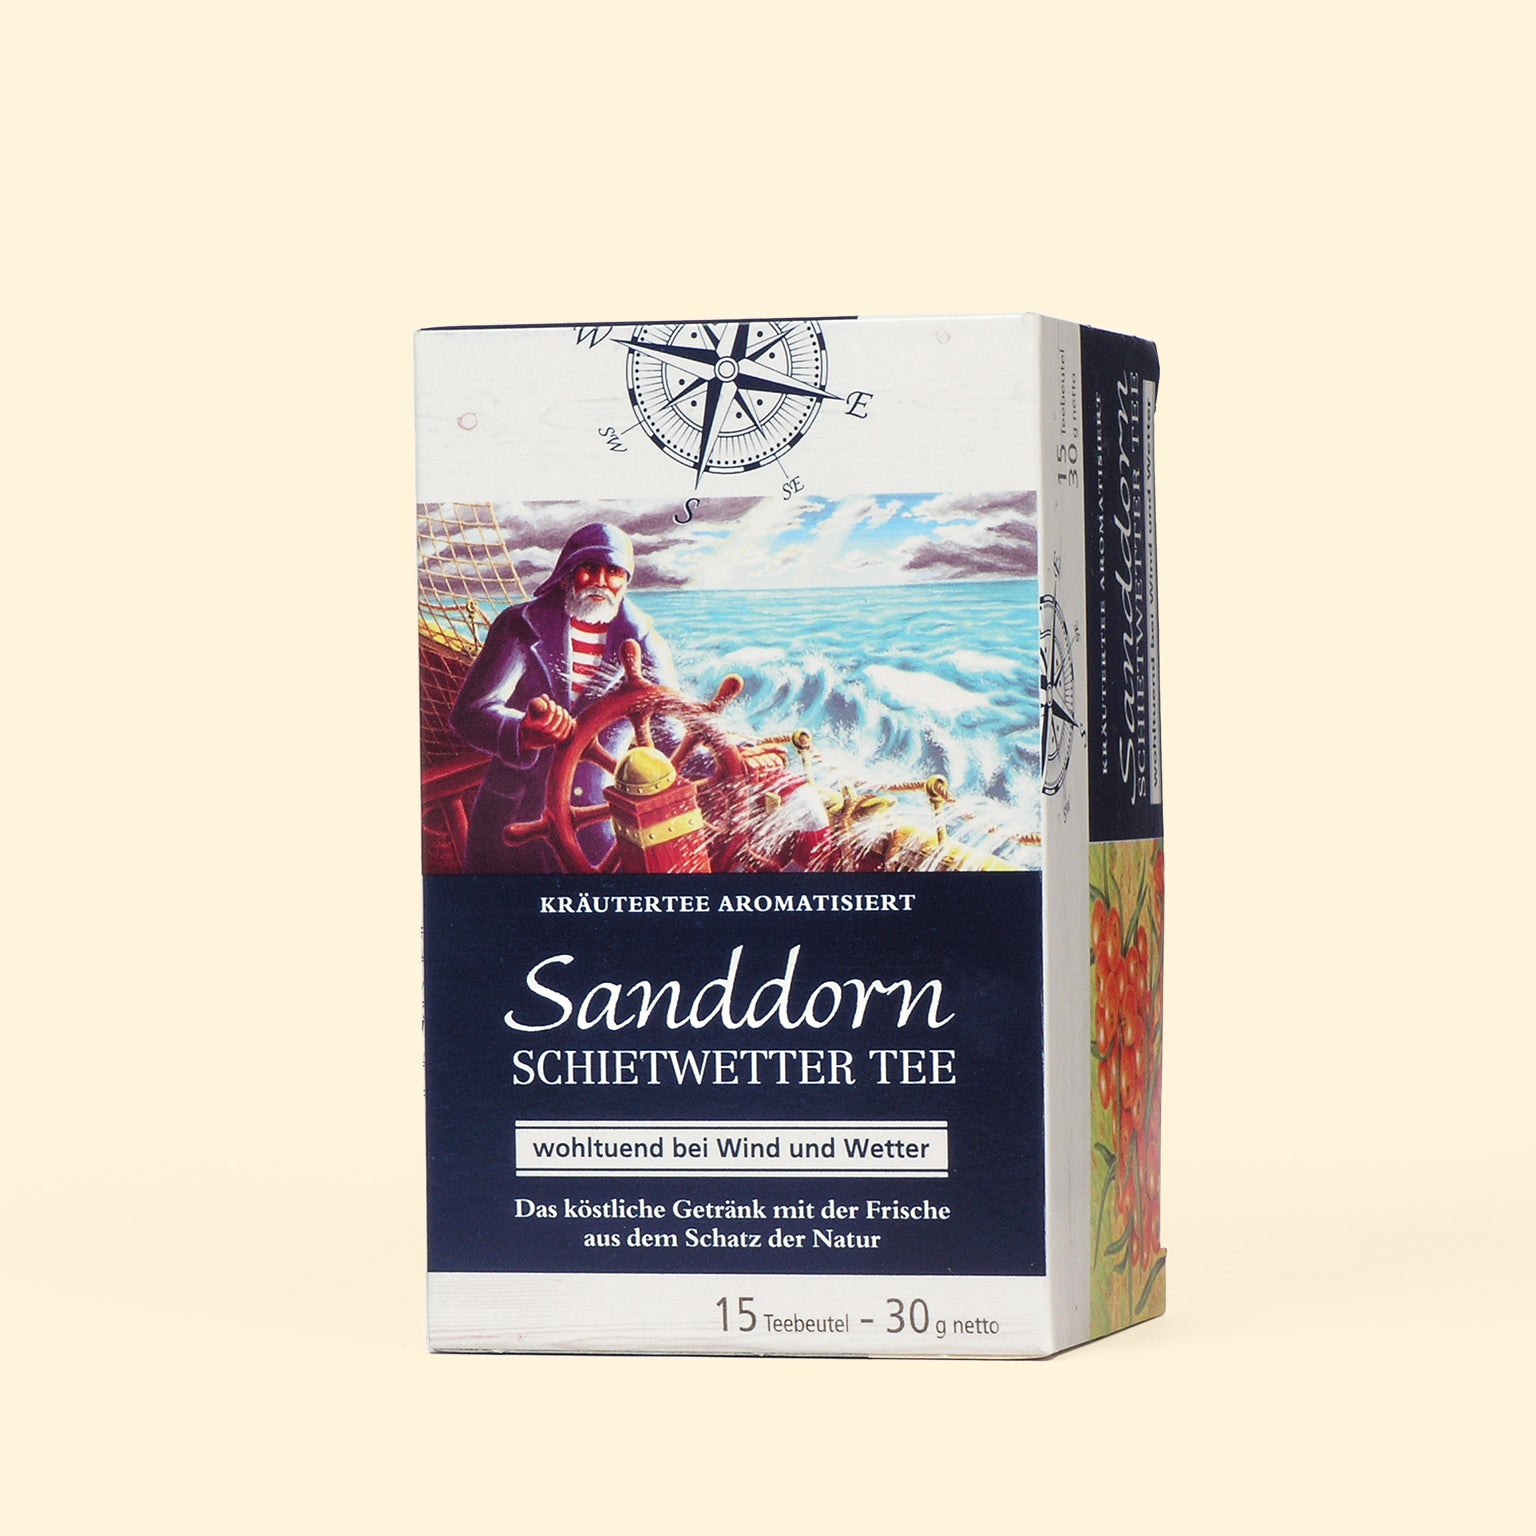 Sanddorn-Schietwetter-Tee, 30g